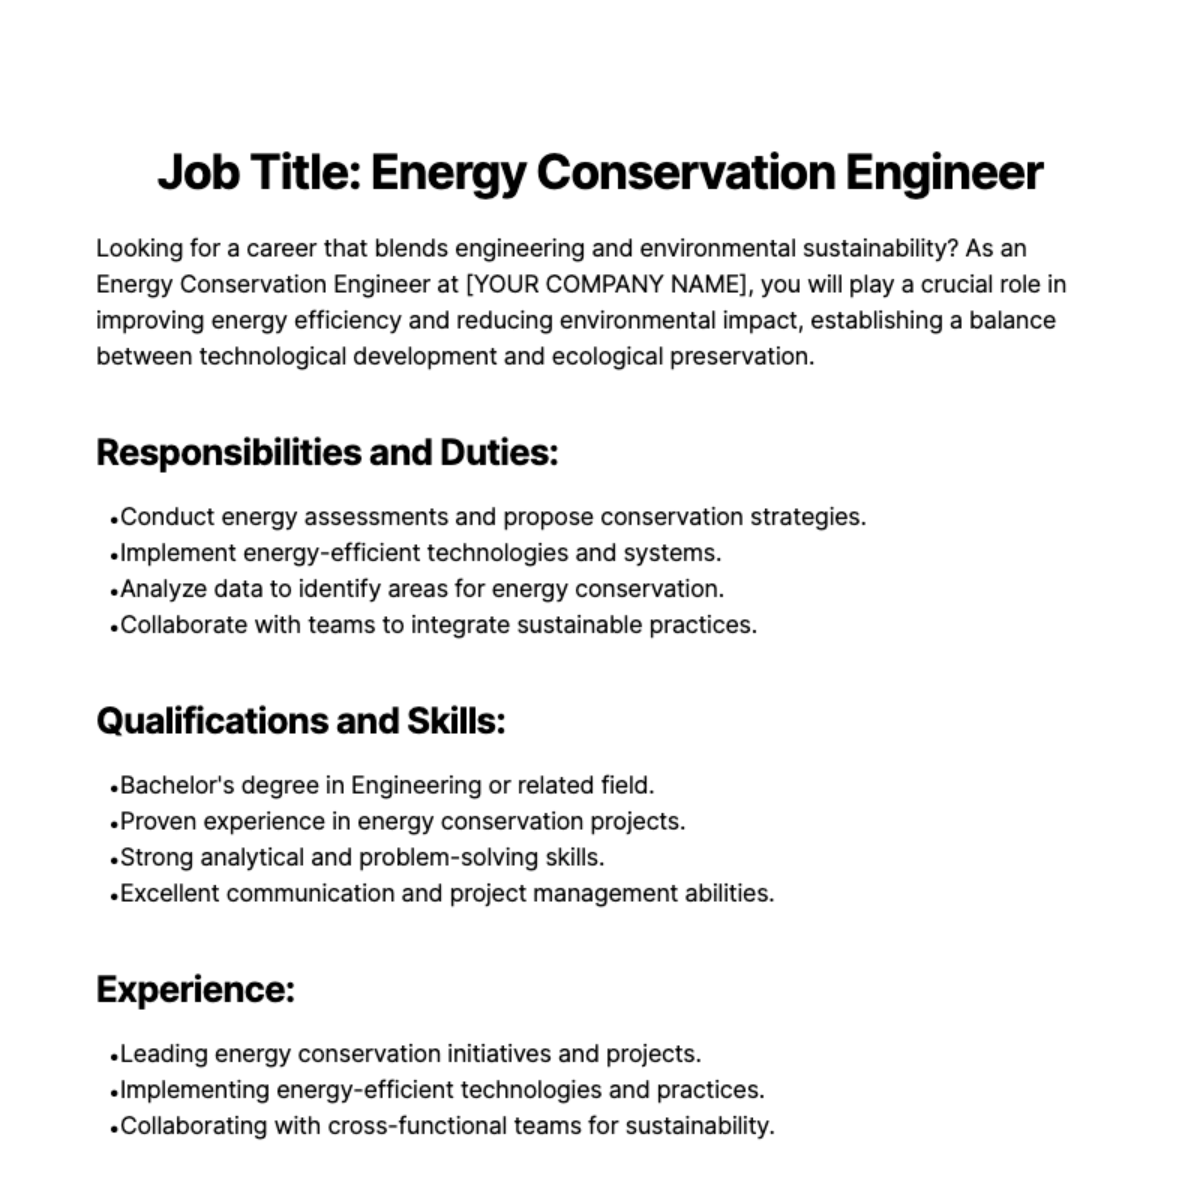 Energy Conservation Engineer Job Description Template